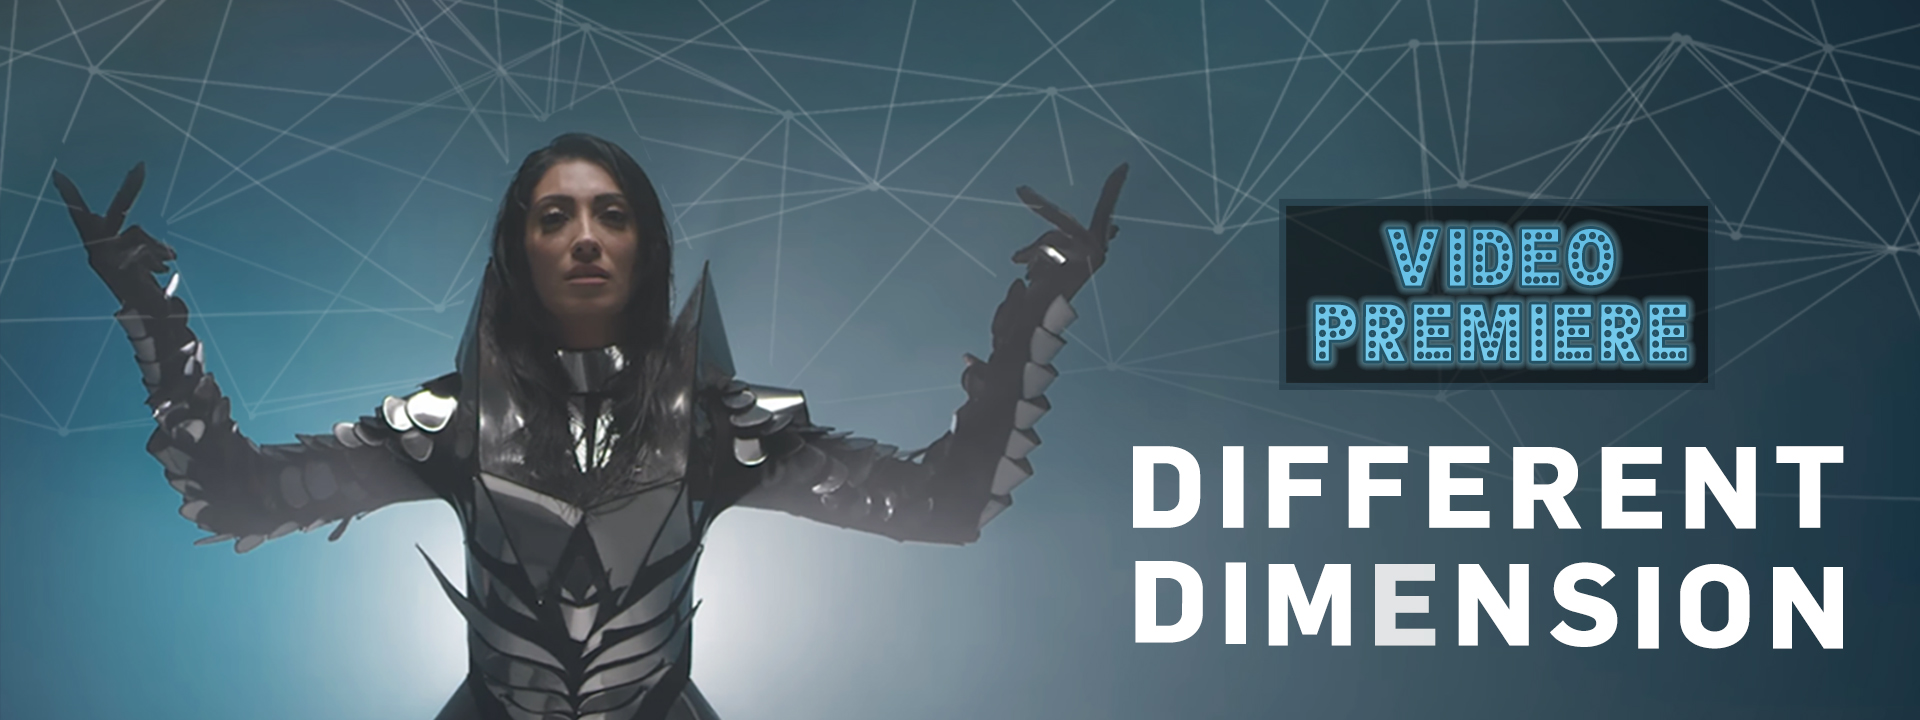 Ro-MiNA - Different Dimension Video Release